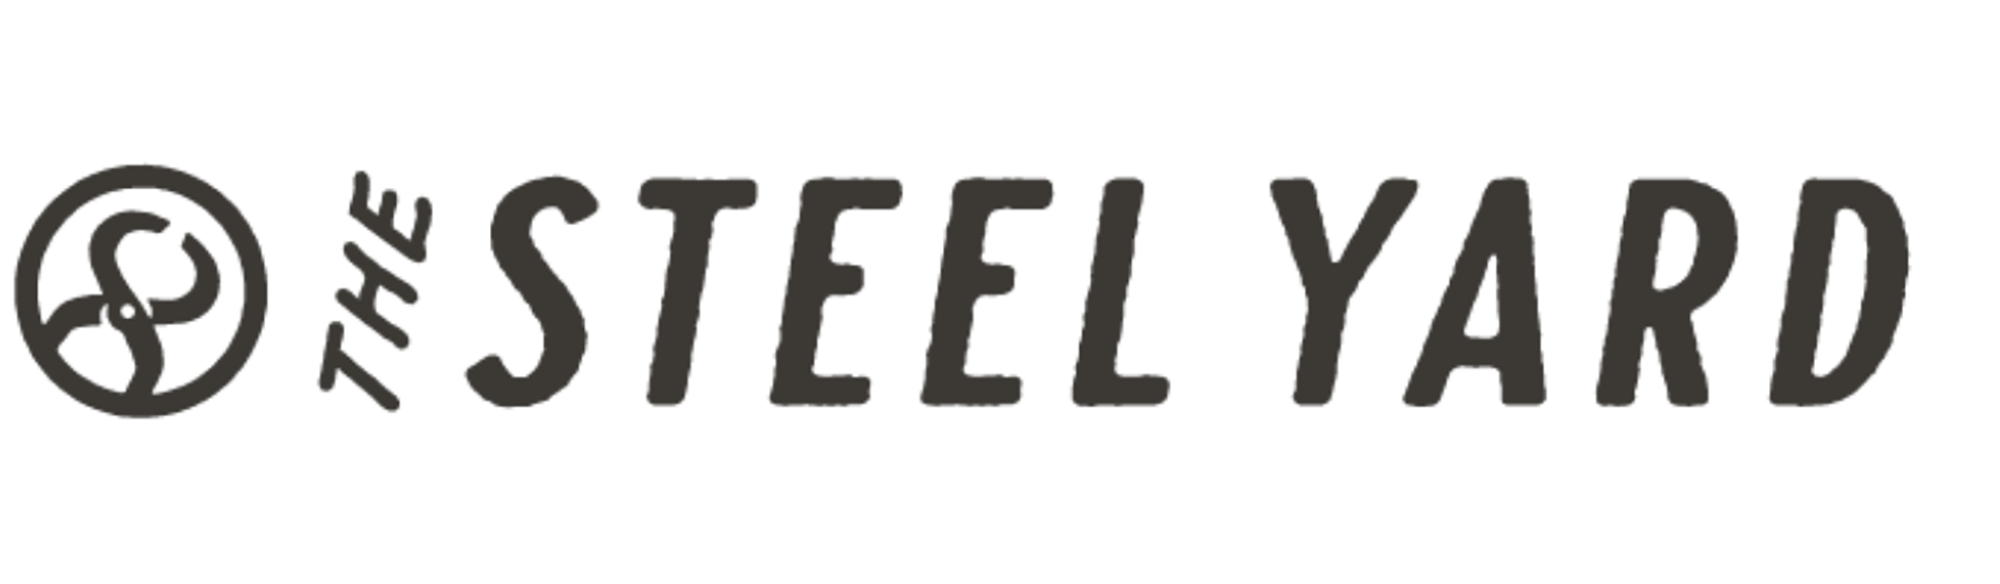 The Steel Yard Logo